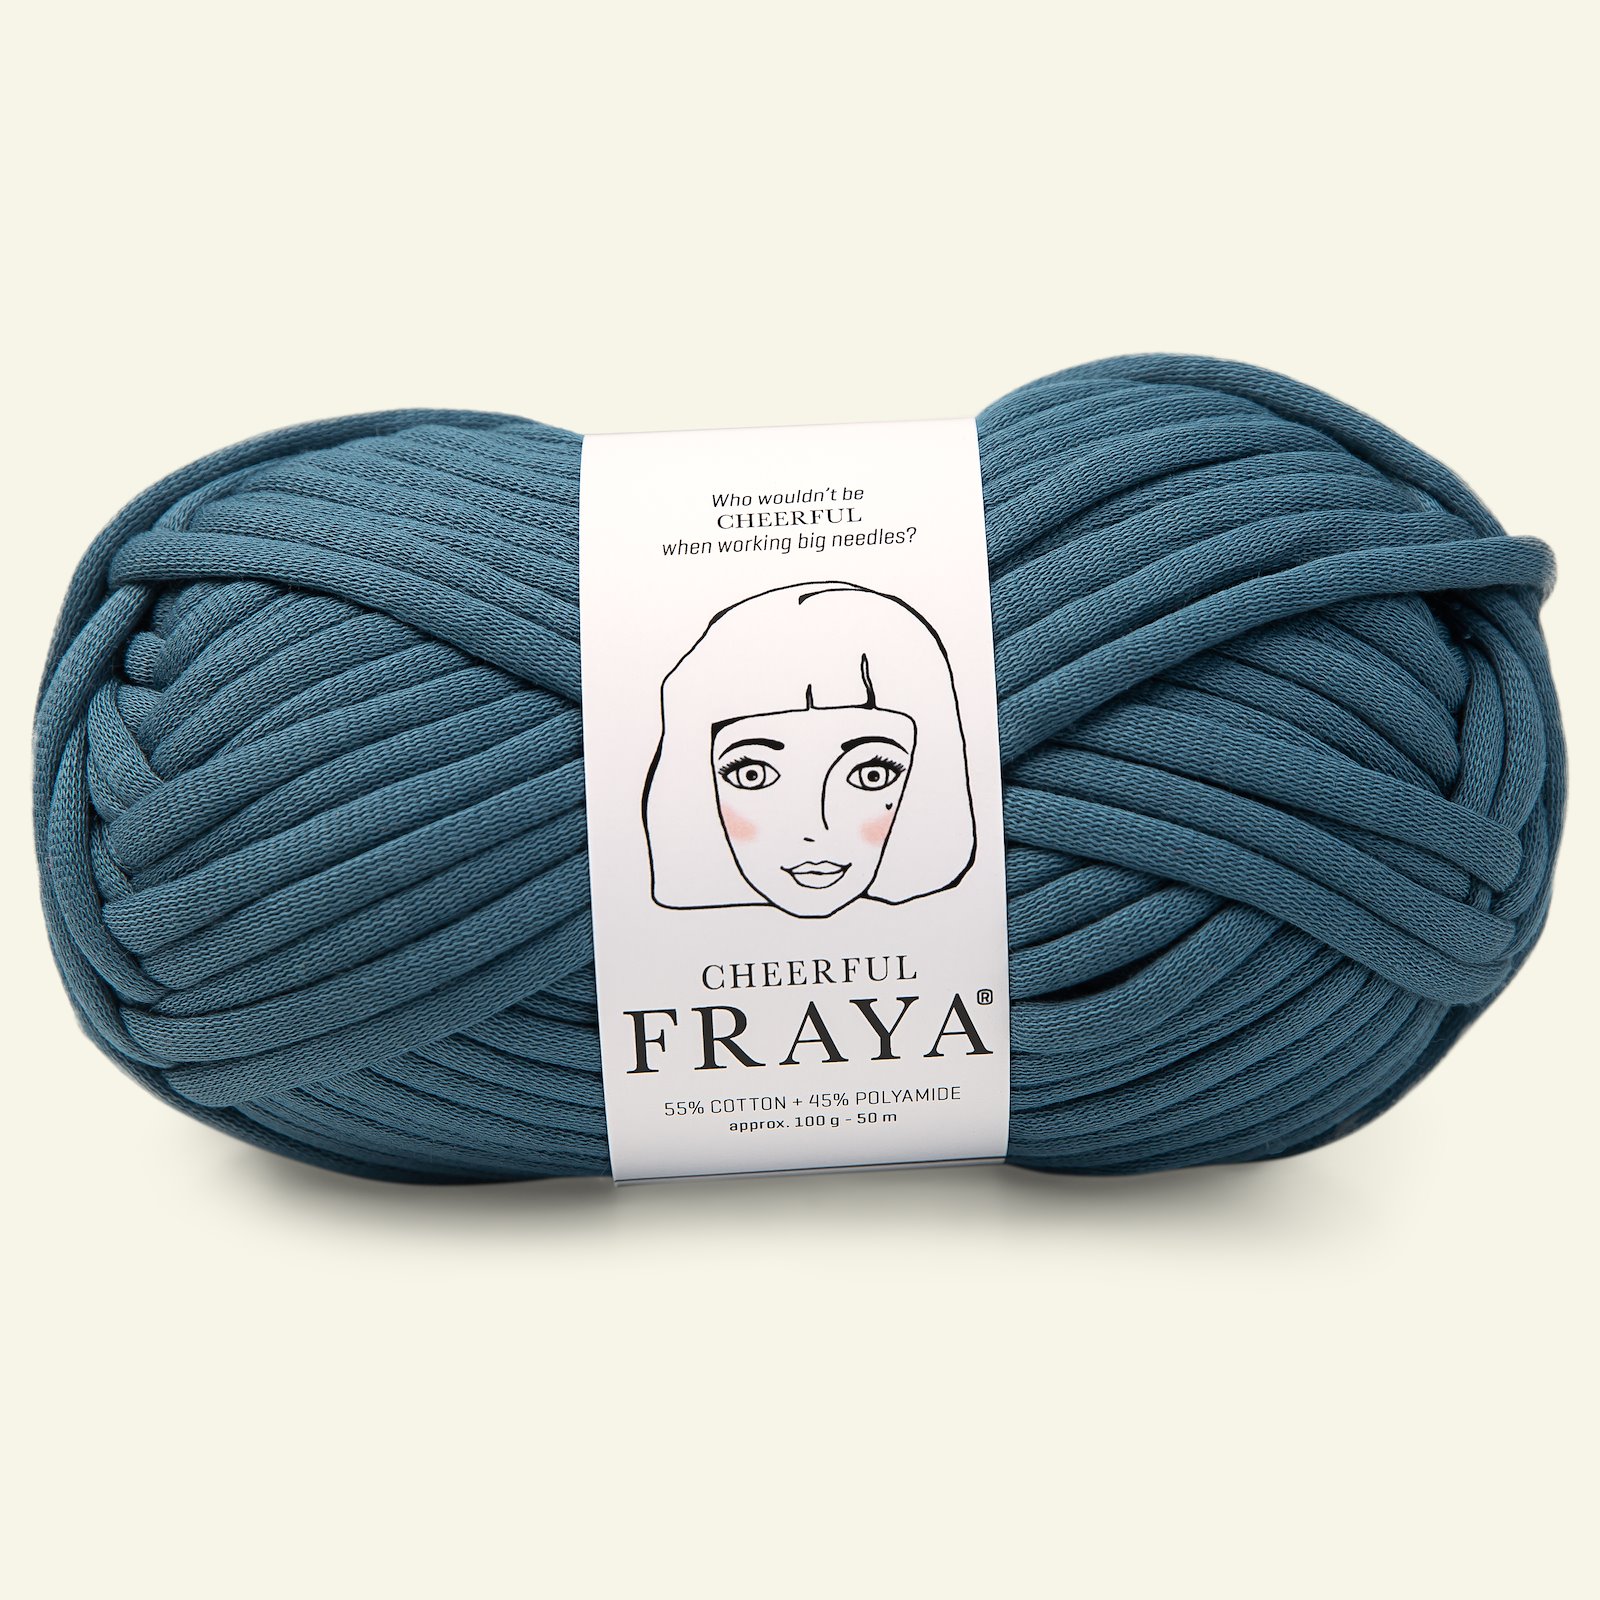 FRAYA, tube yarn "Cheerful", blue 90053590_pack